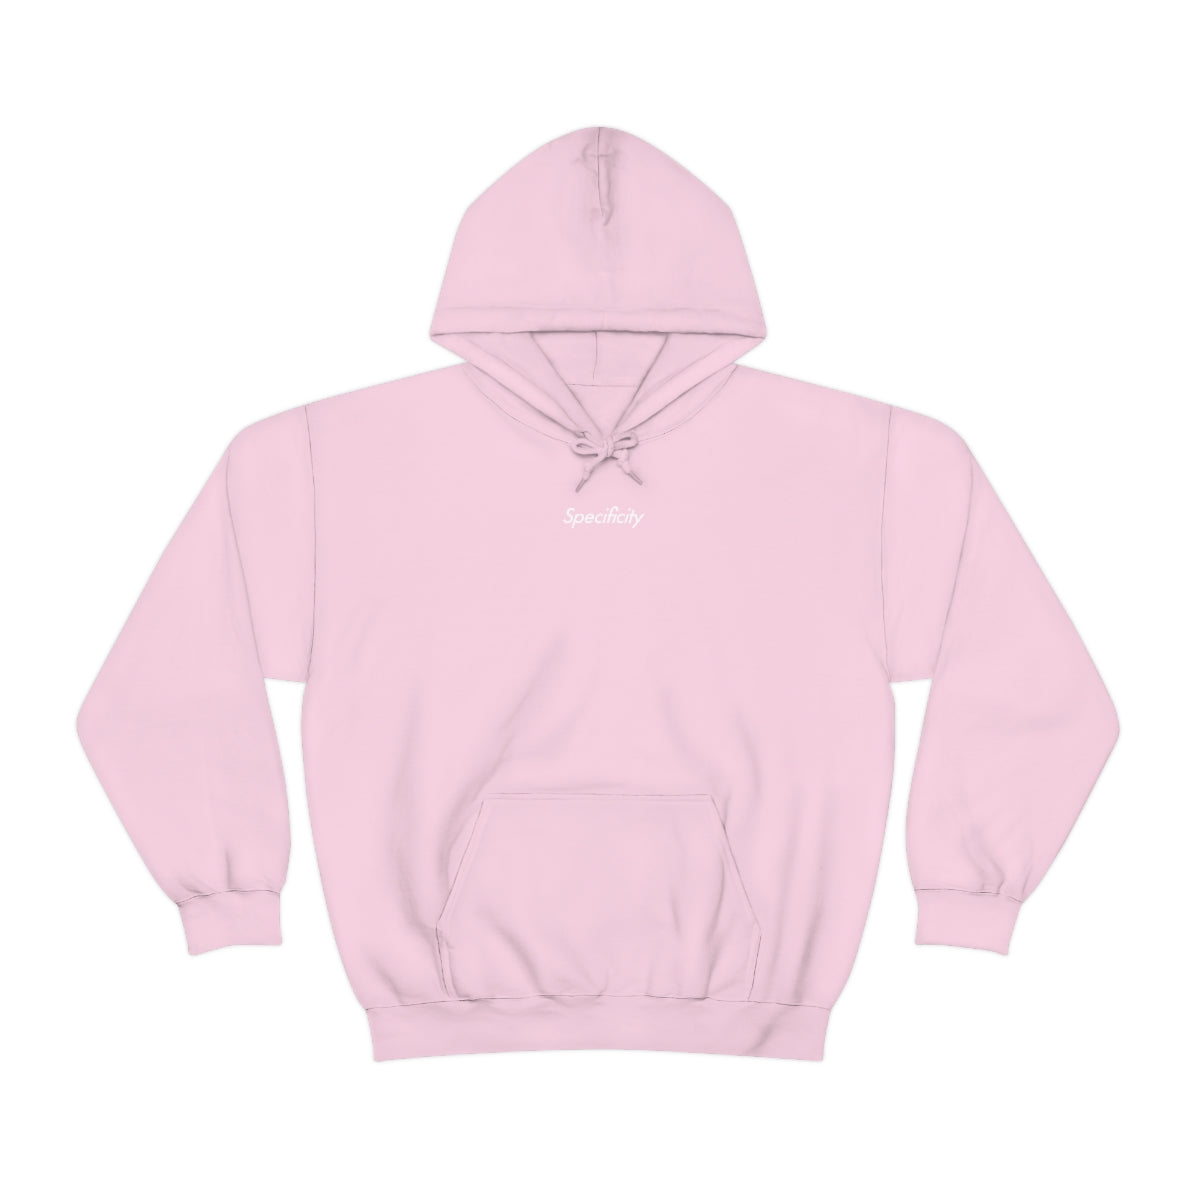 Specificity - Hooded Sweatshirt | Hoodie | PARADIS SVP